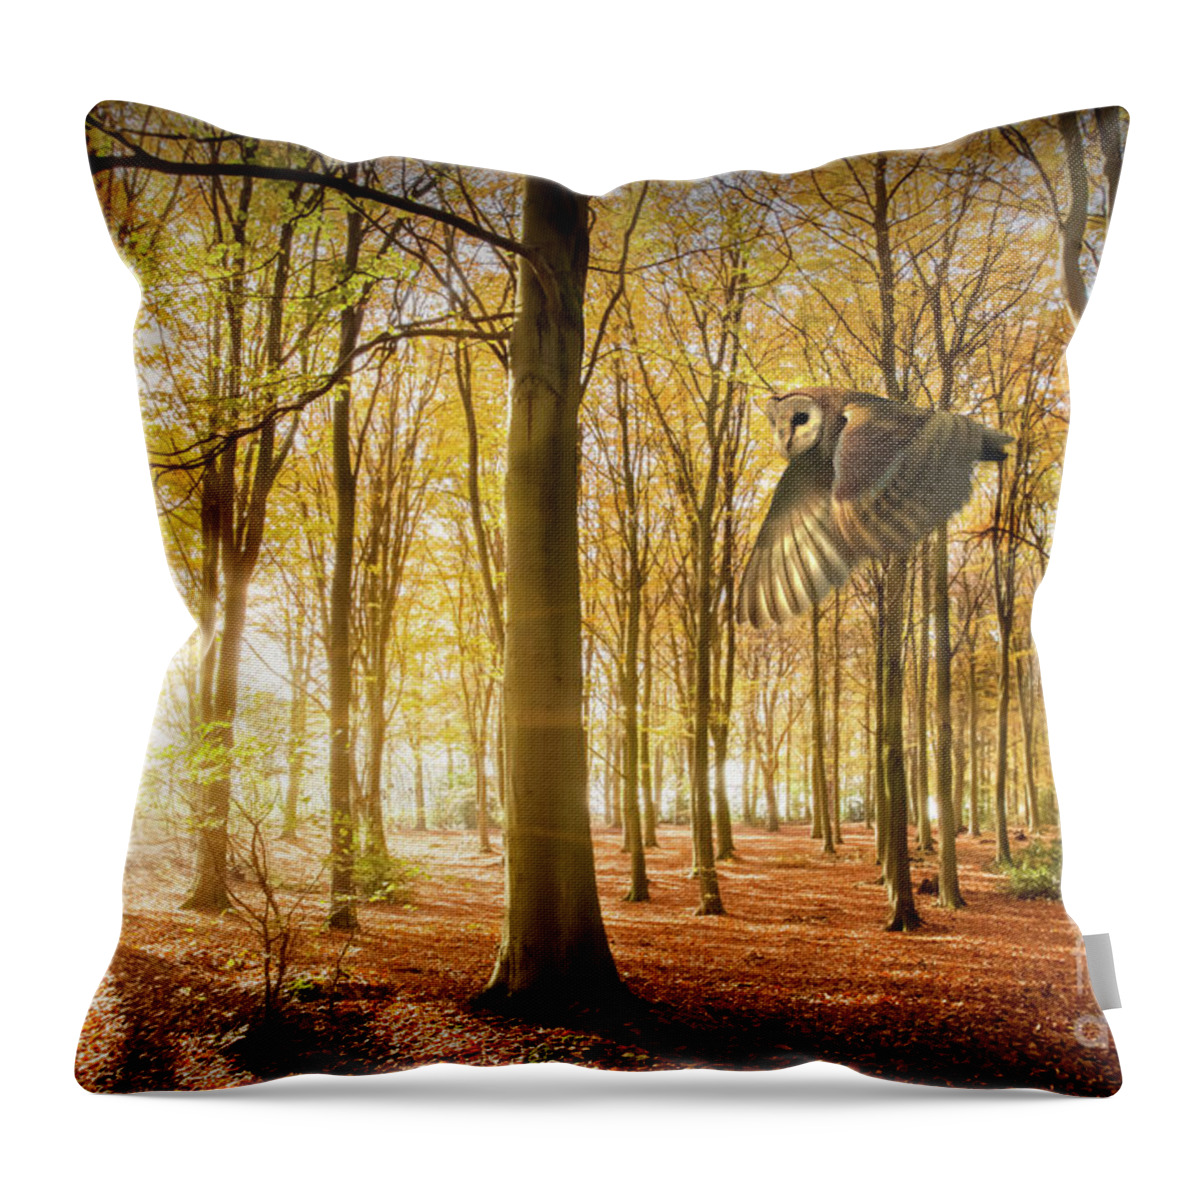 Autumn Throw Pillow featuring the photograph Barn owl flying in autumn woodland by Simon Bratt